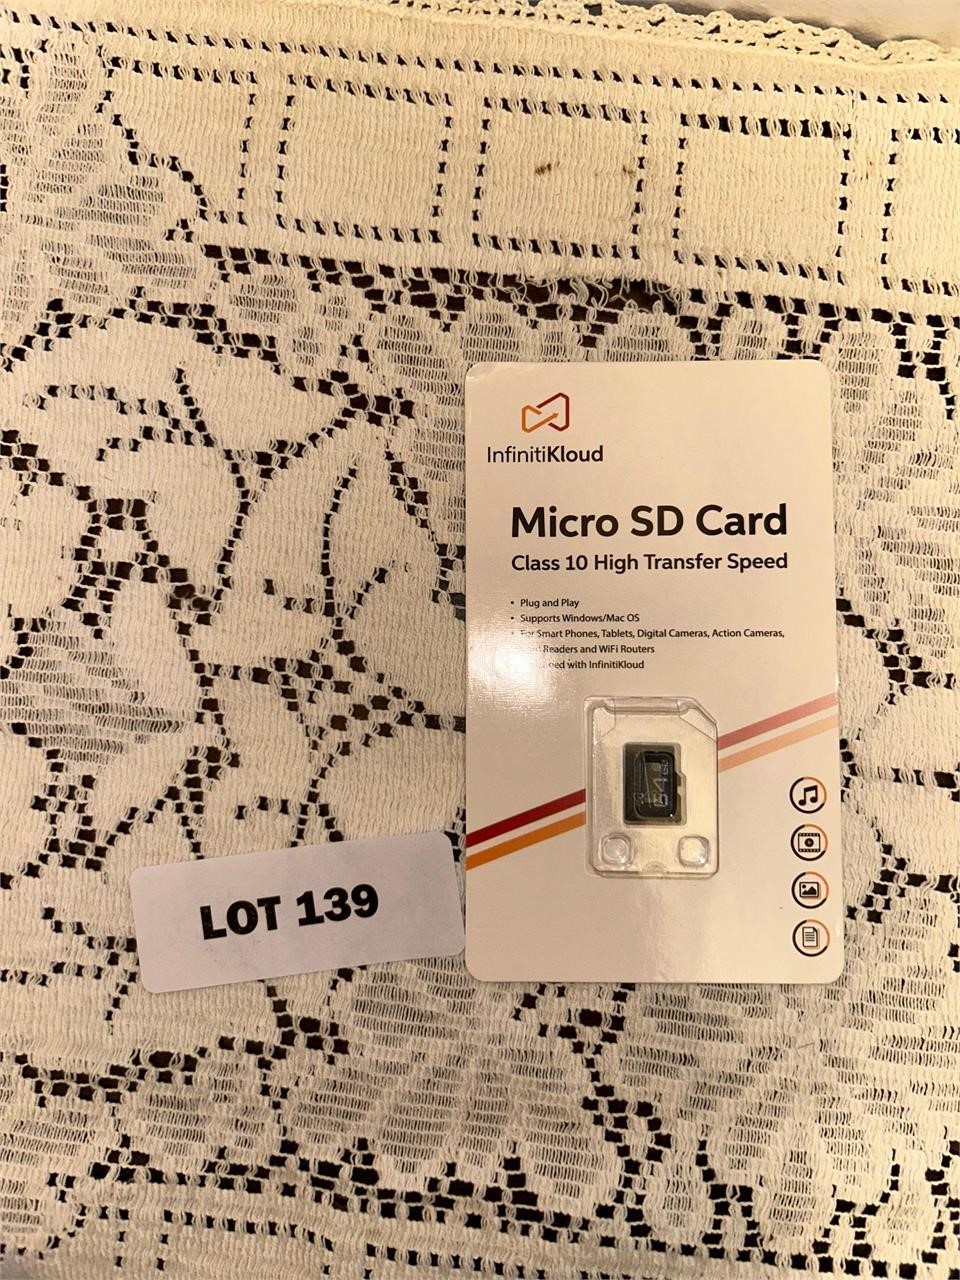 64 GB Micro SD Card